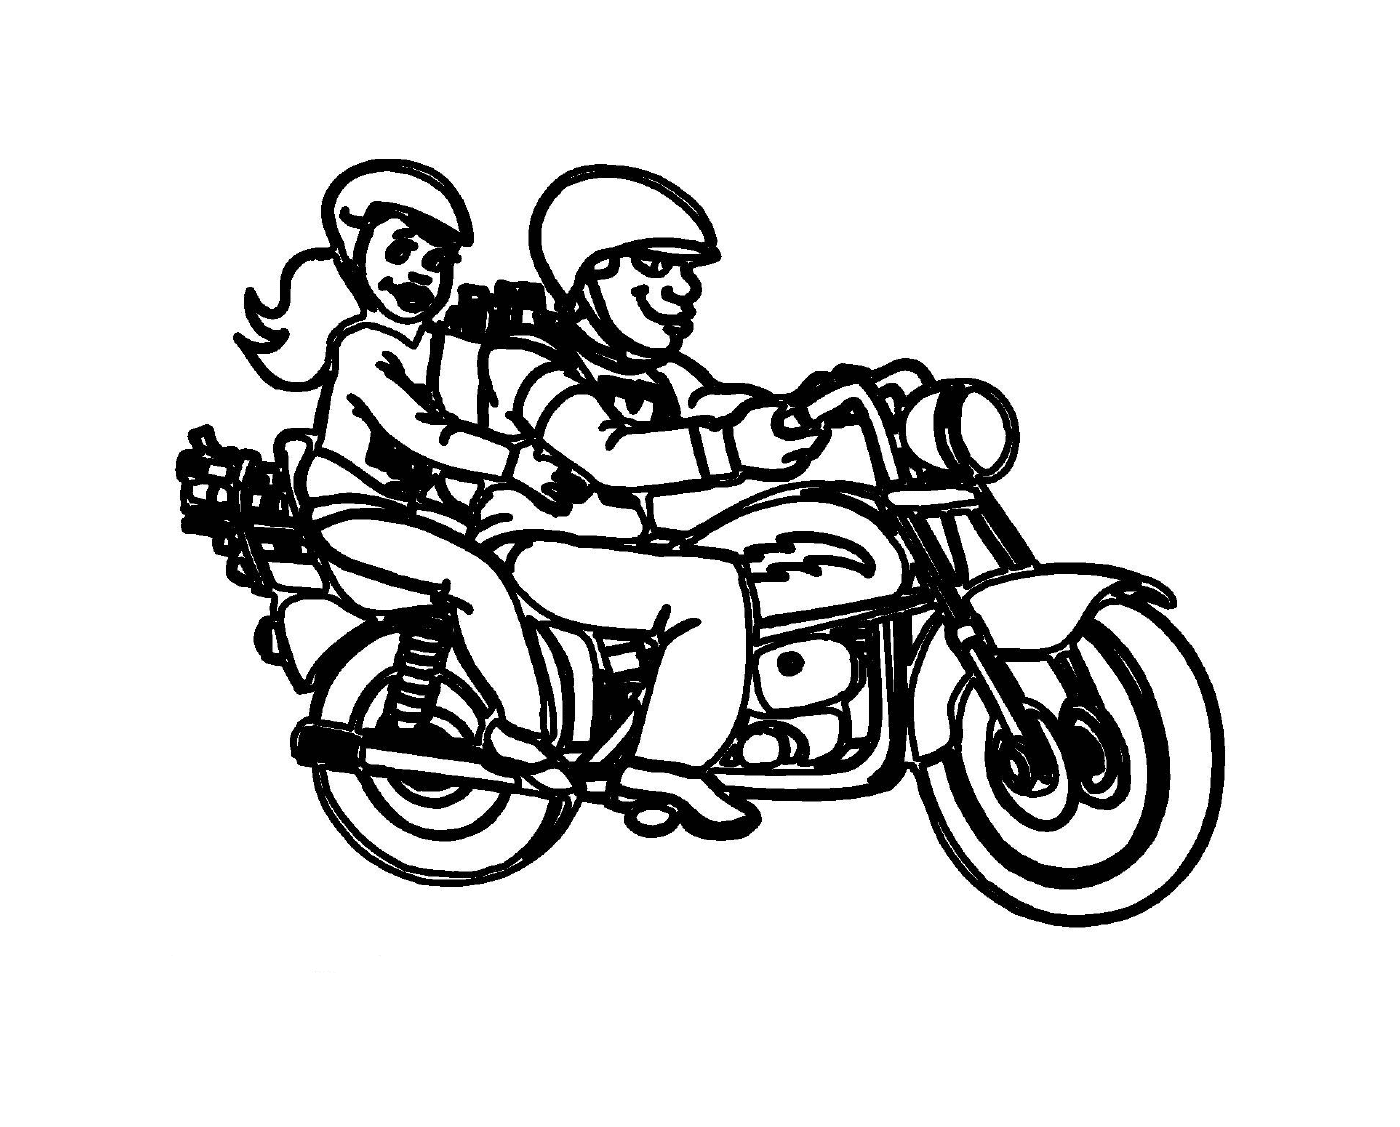  два человека на мотоциклах 